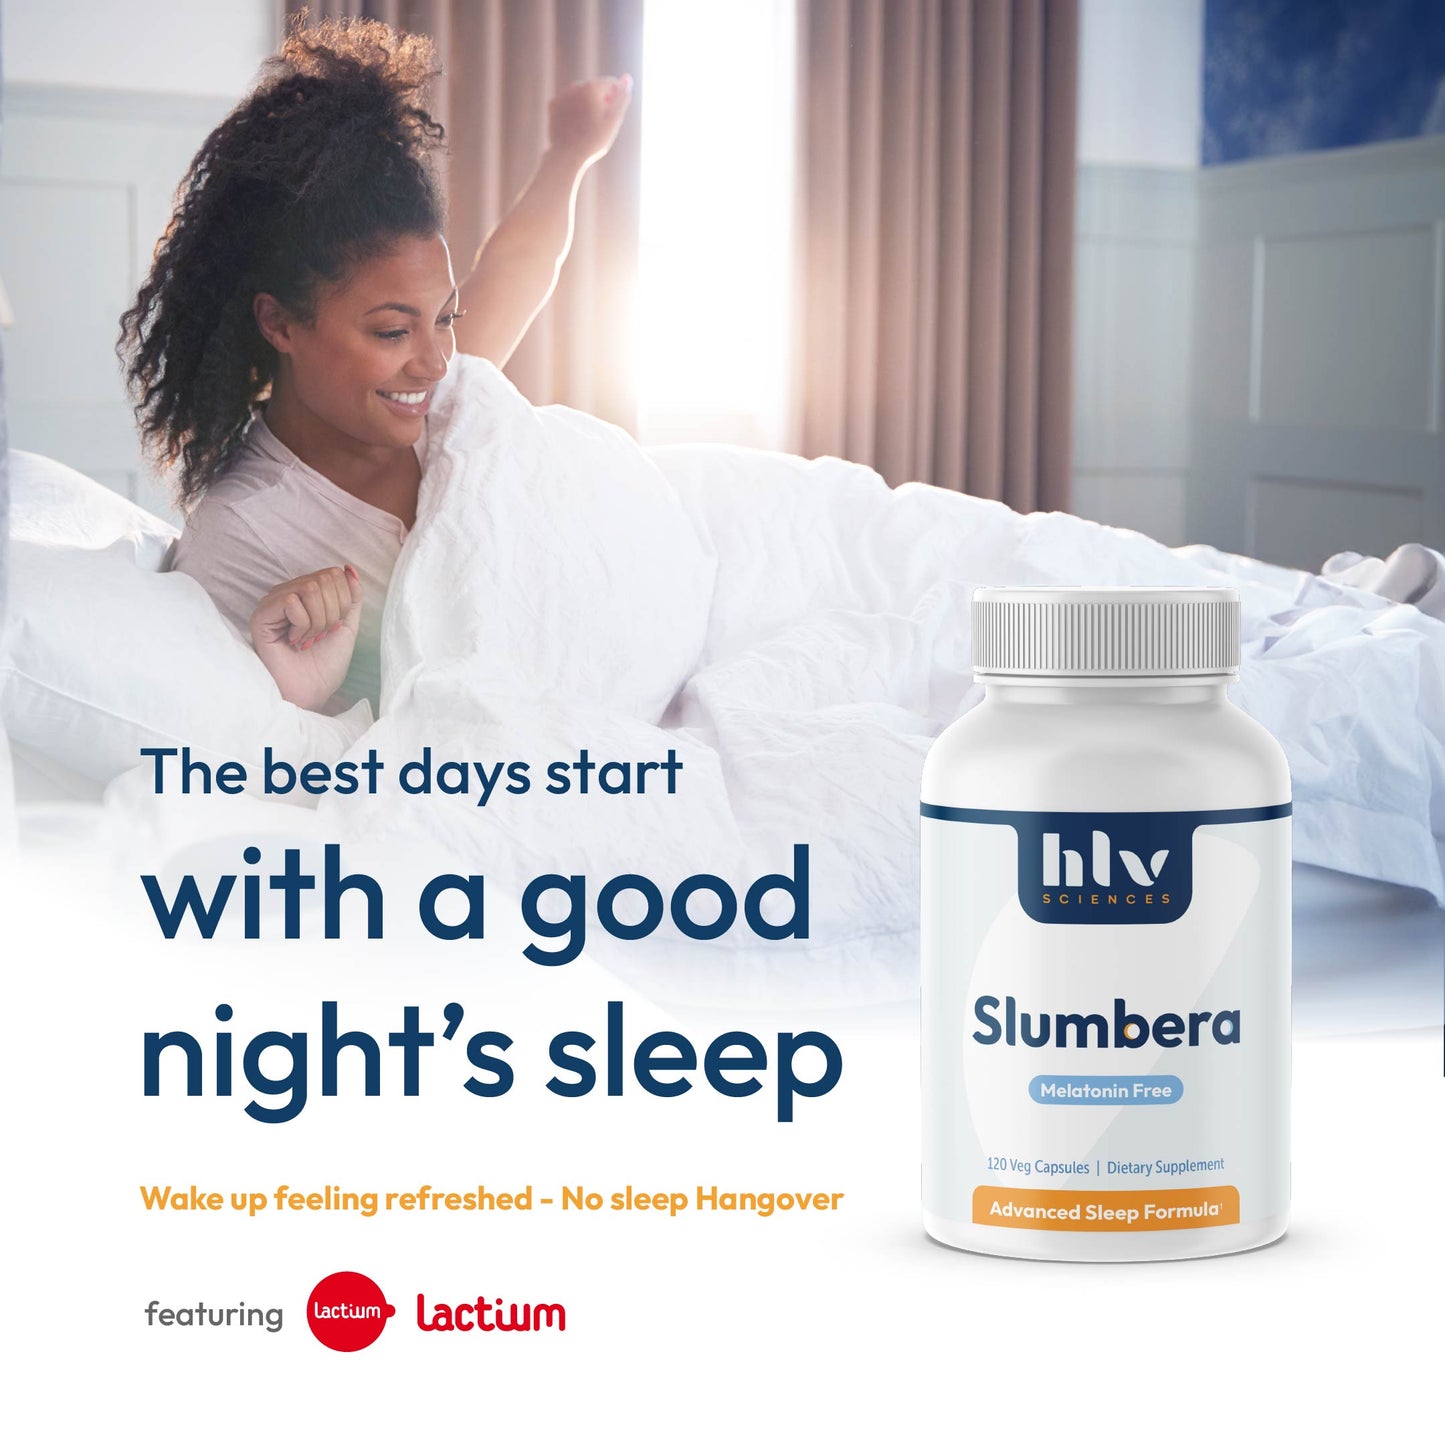 Slumbera Natural Sleep Supplement by HLV Sciences - Sleep Aid with 120 Veg Capsules